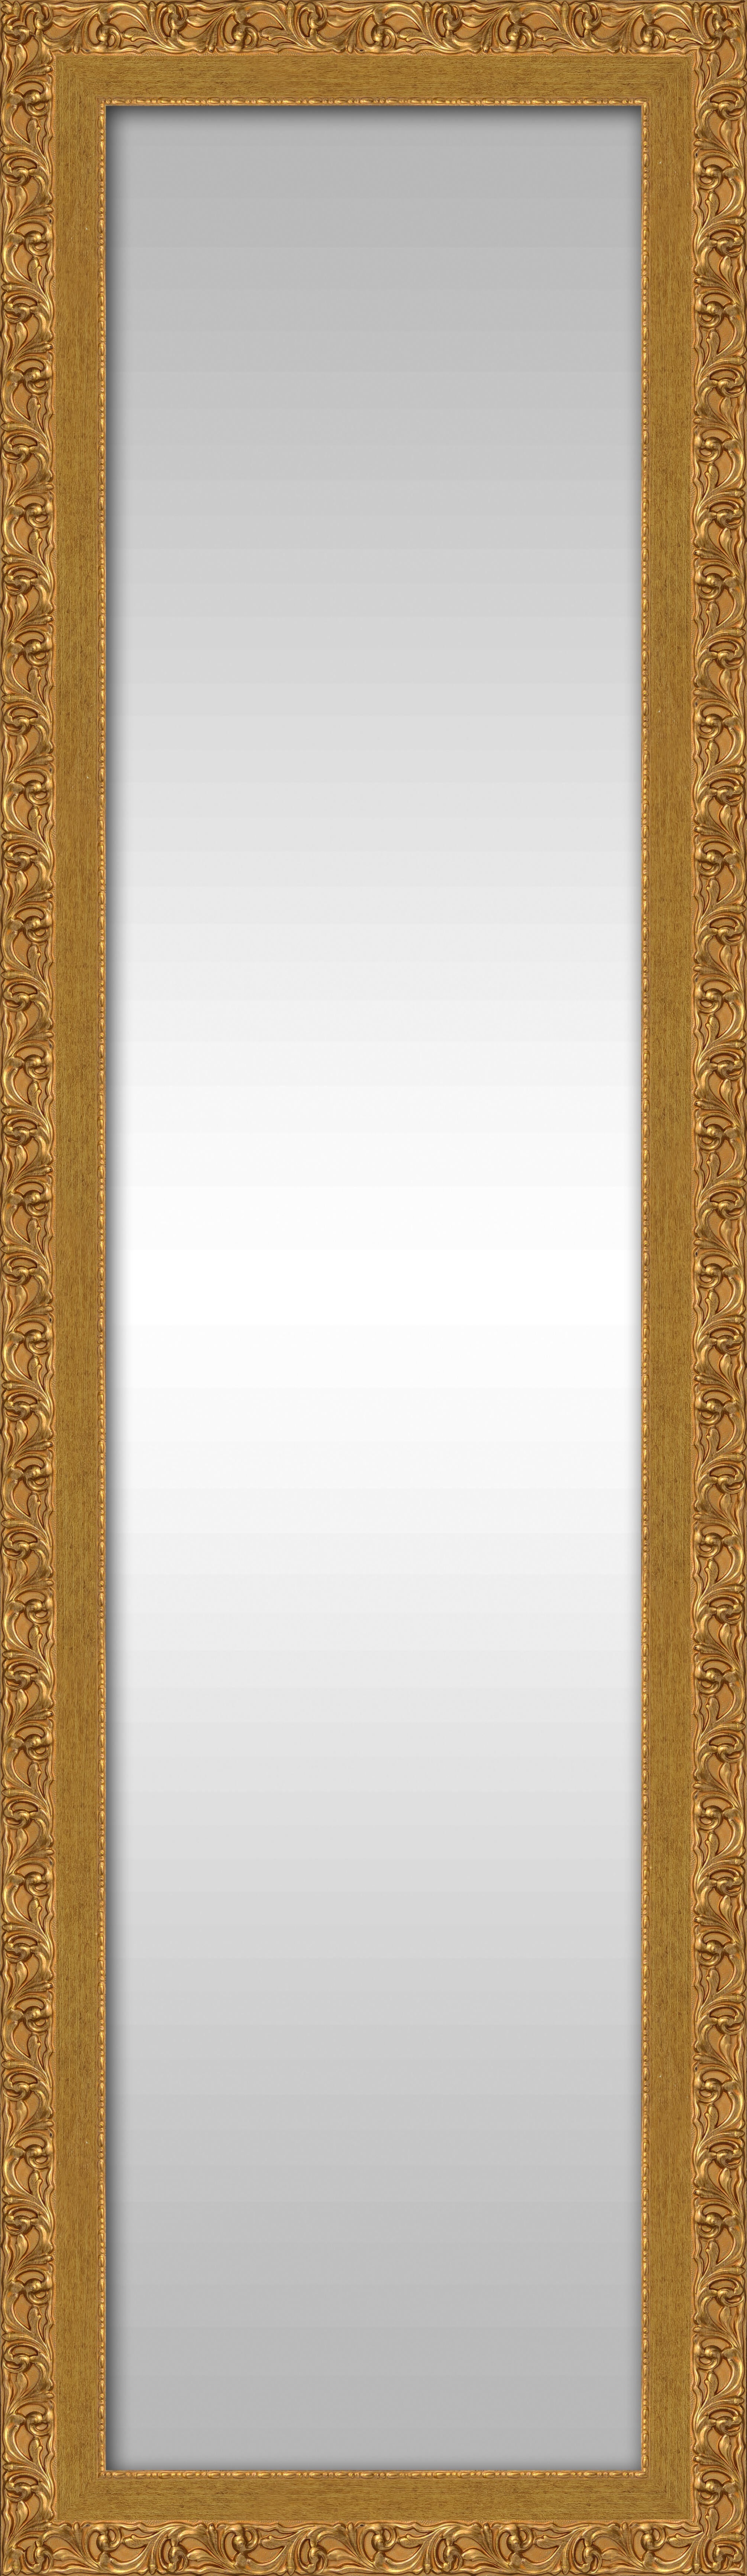 Espejo enmarcado rectangular romantique dorado 170 x 50 cm